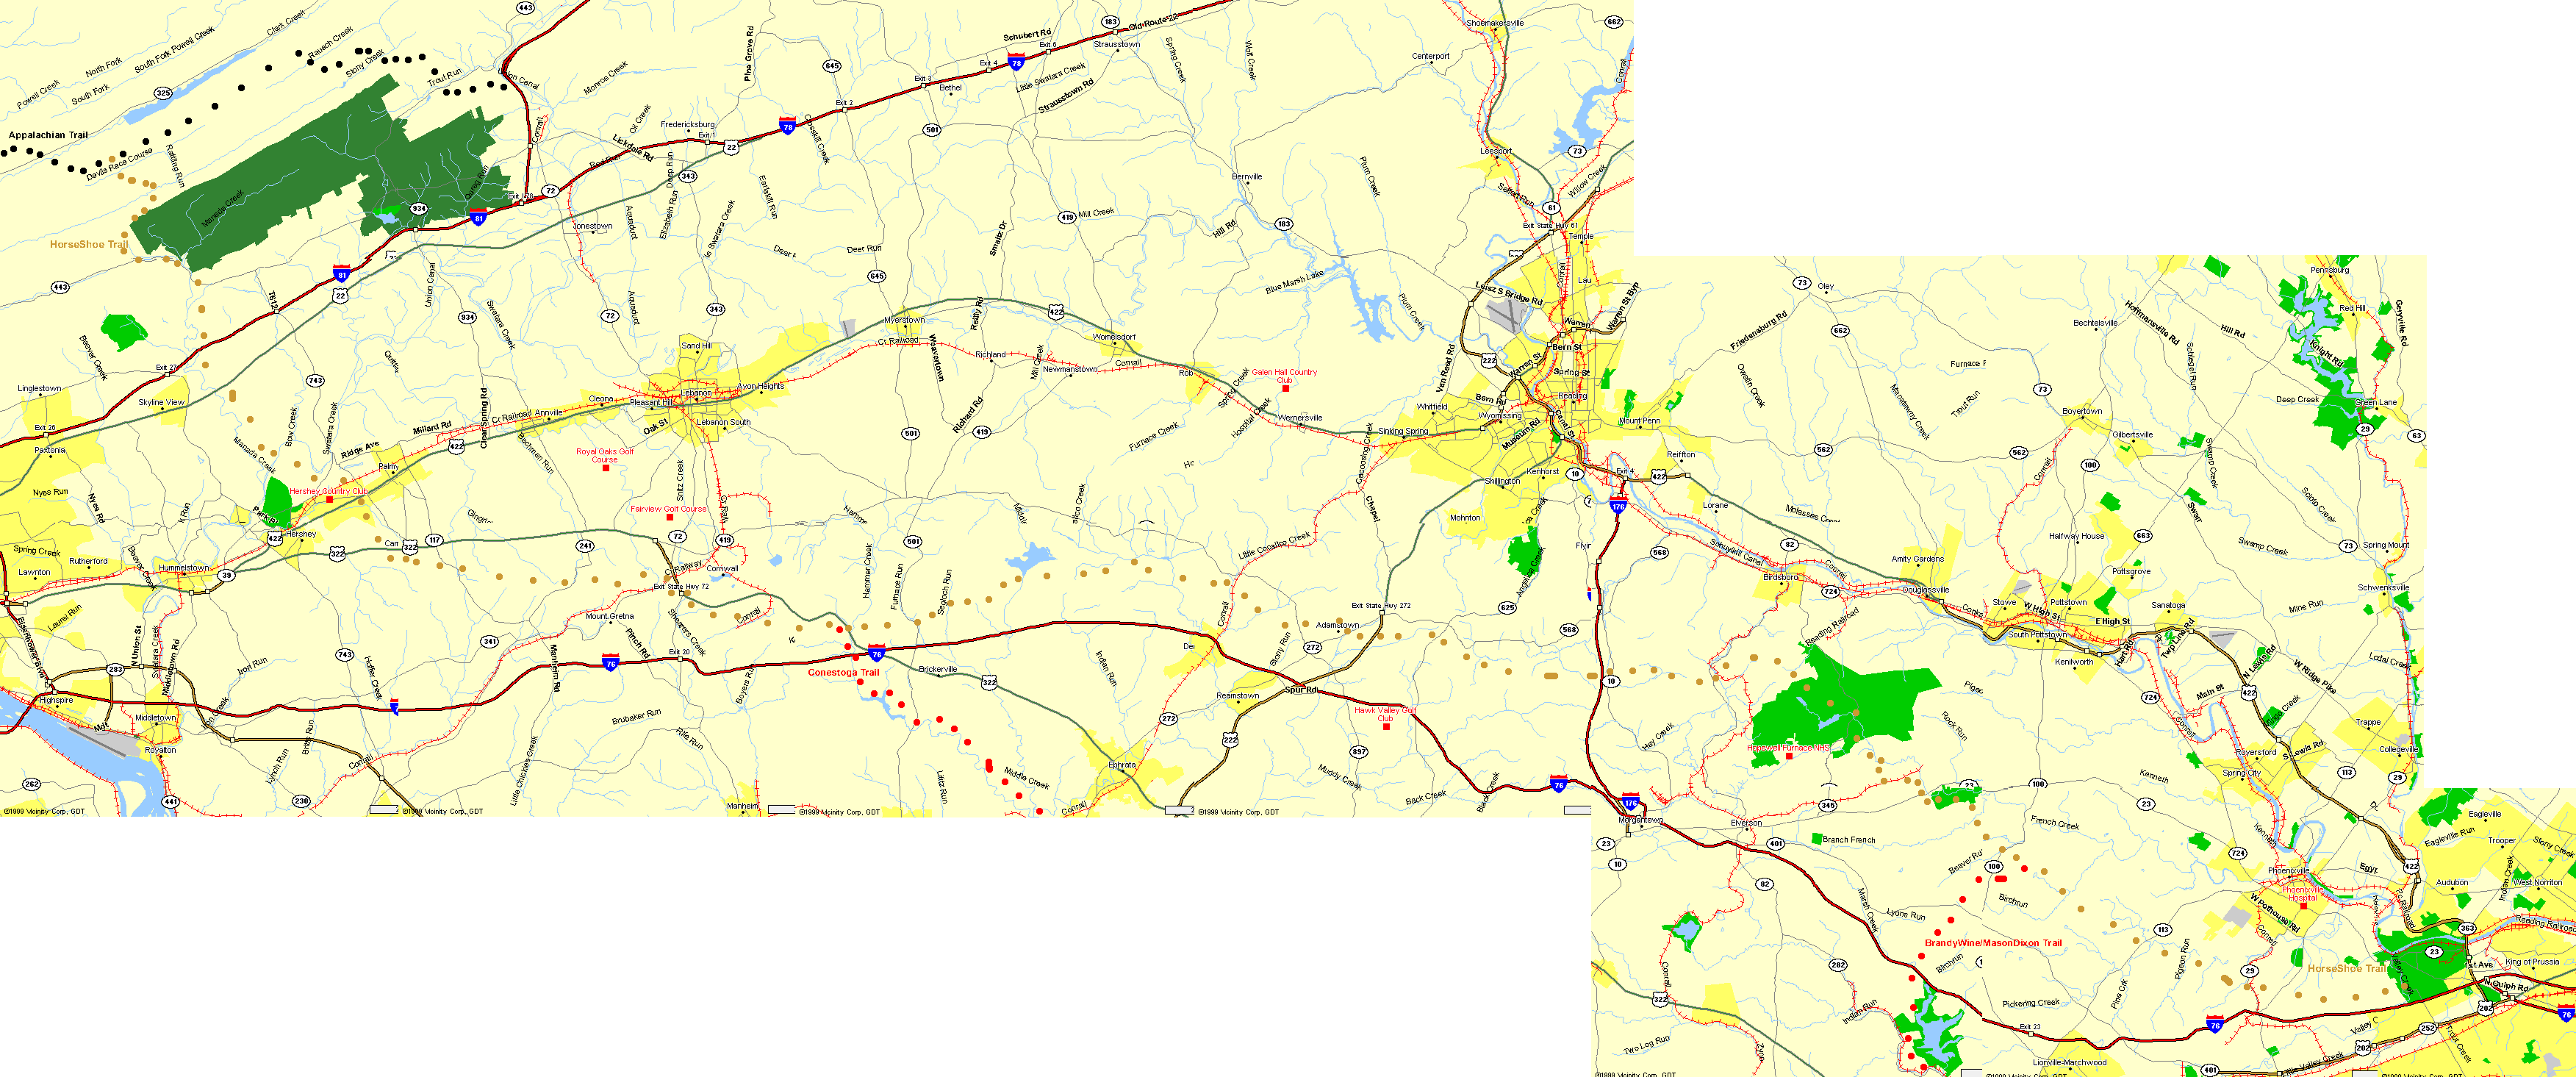 Horseshoe Trail Map